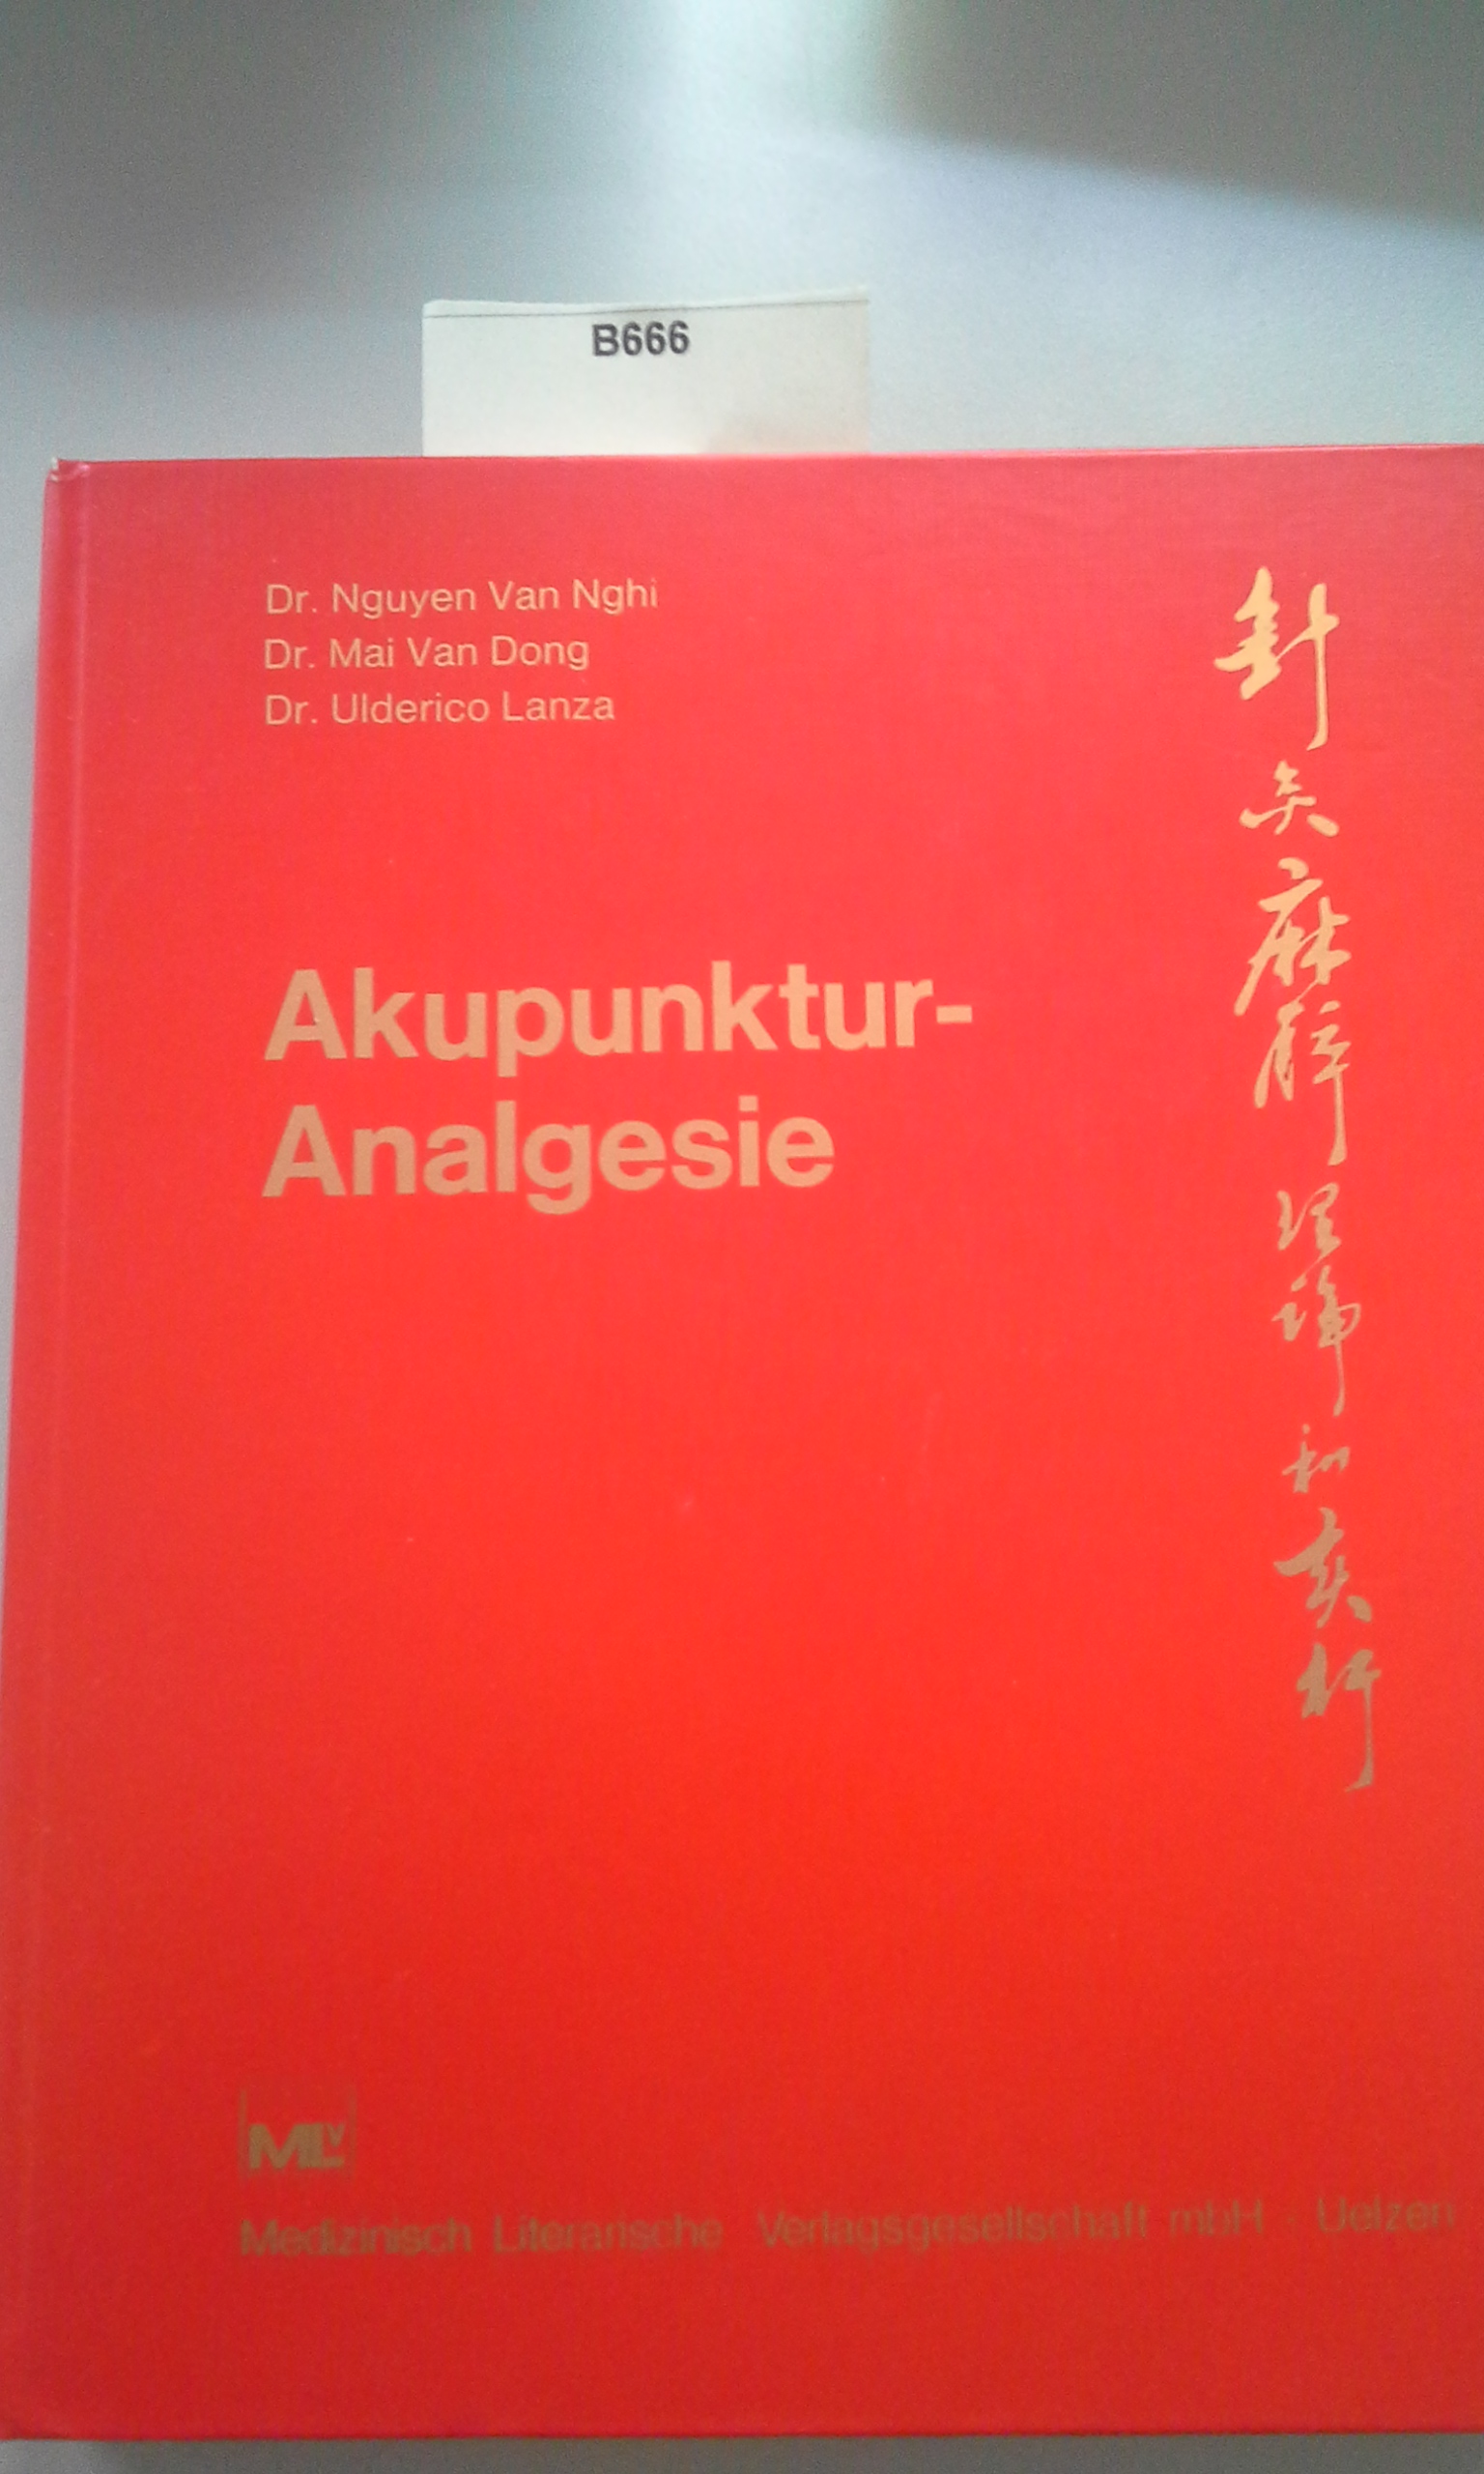 Buch: B666 Akupunktur-Analgesie